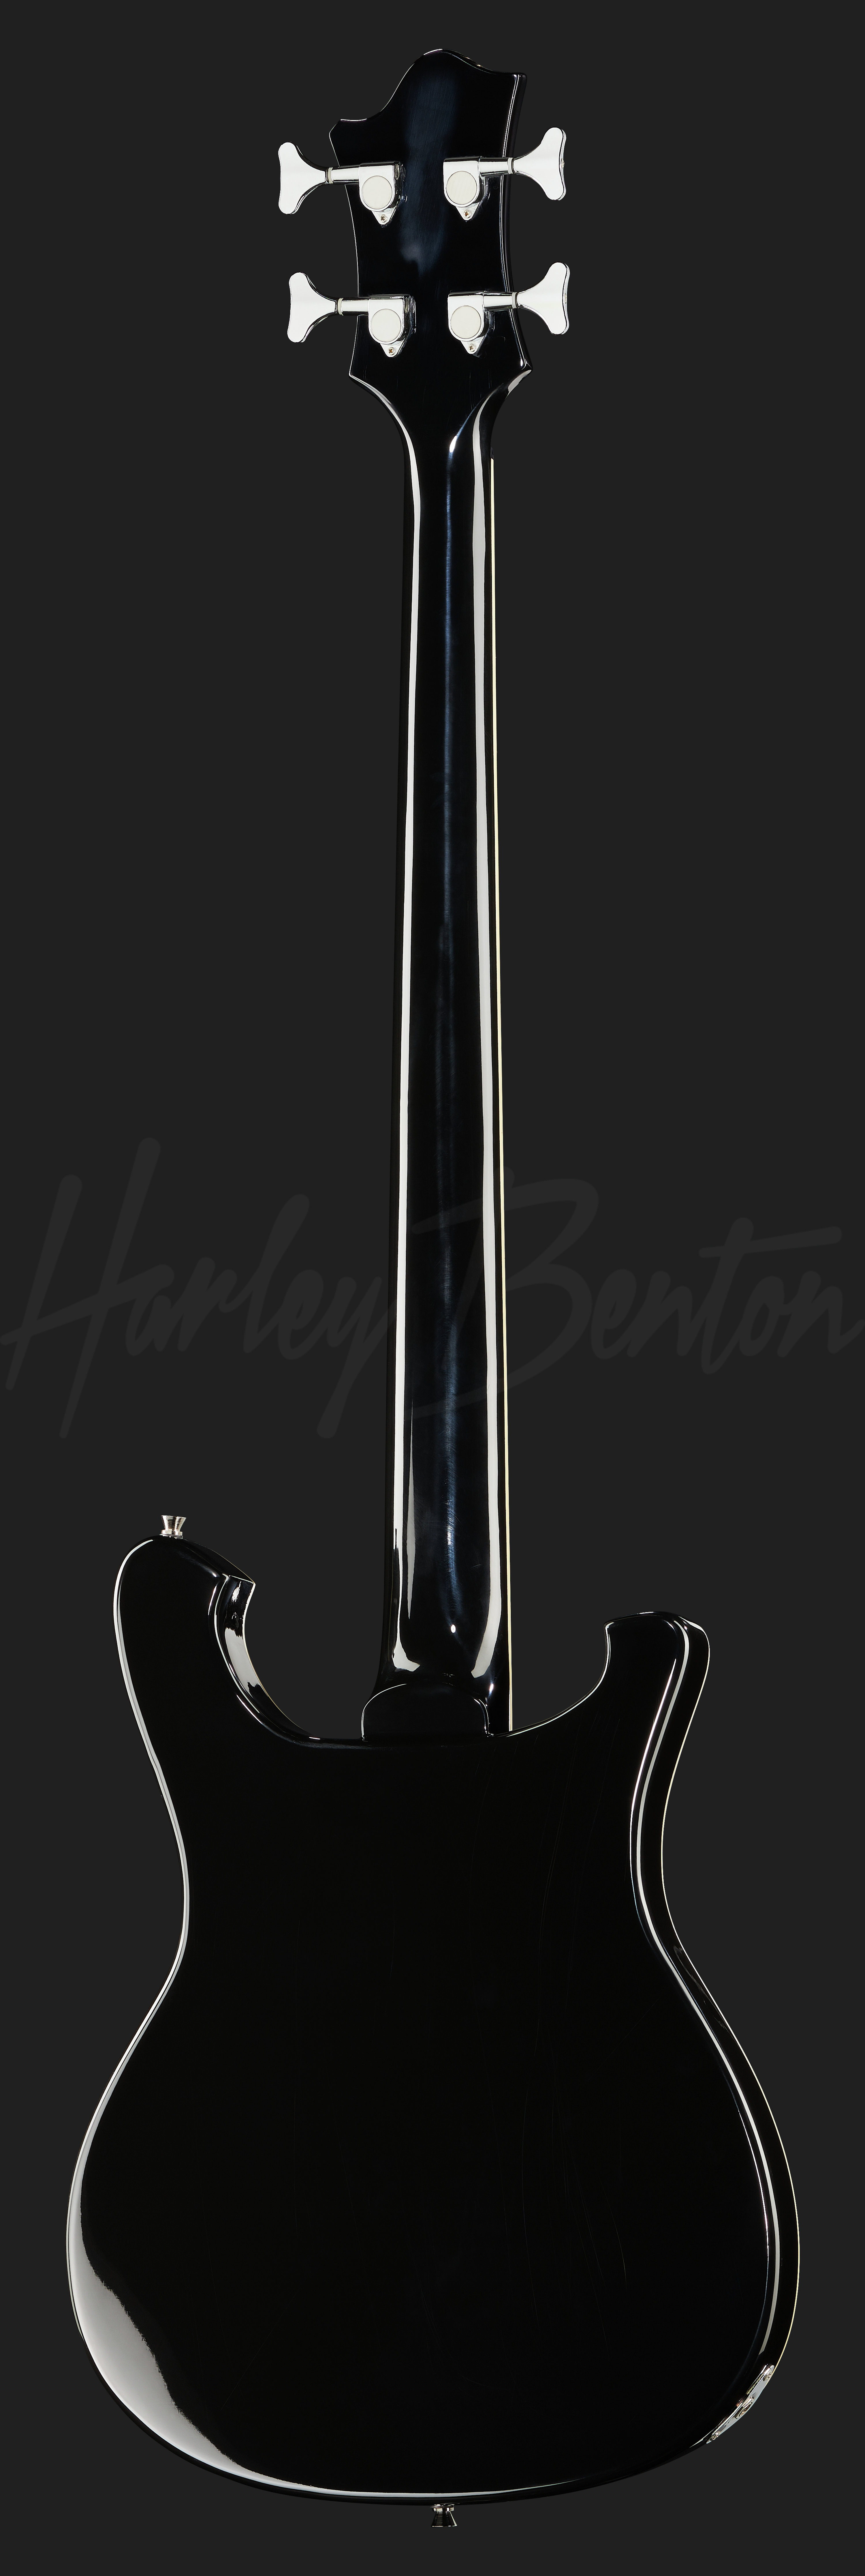 RB-414LH BK - Harley Benton